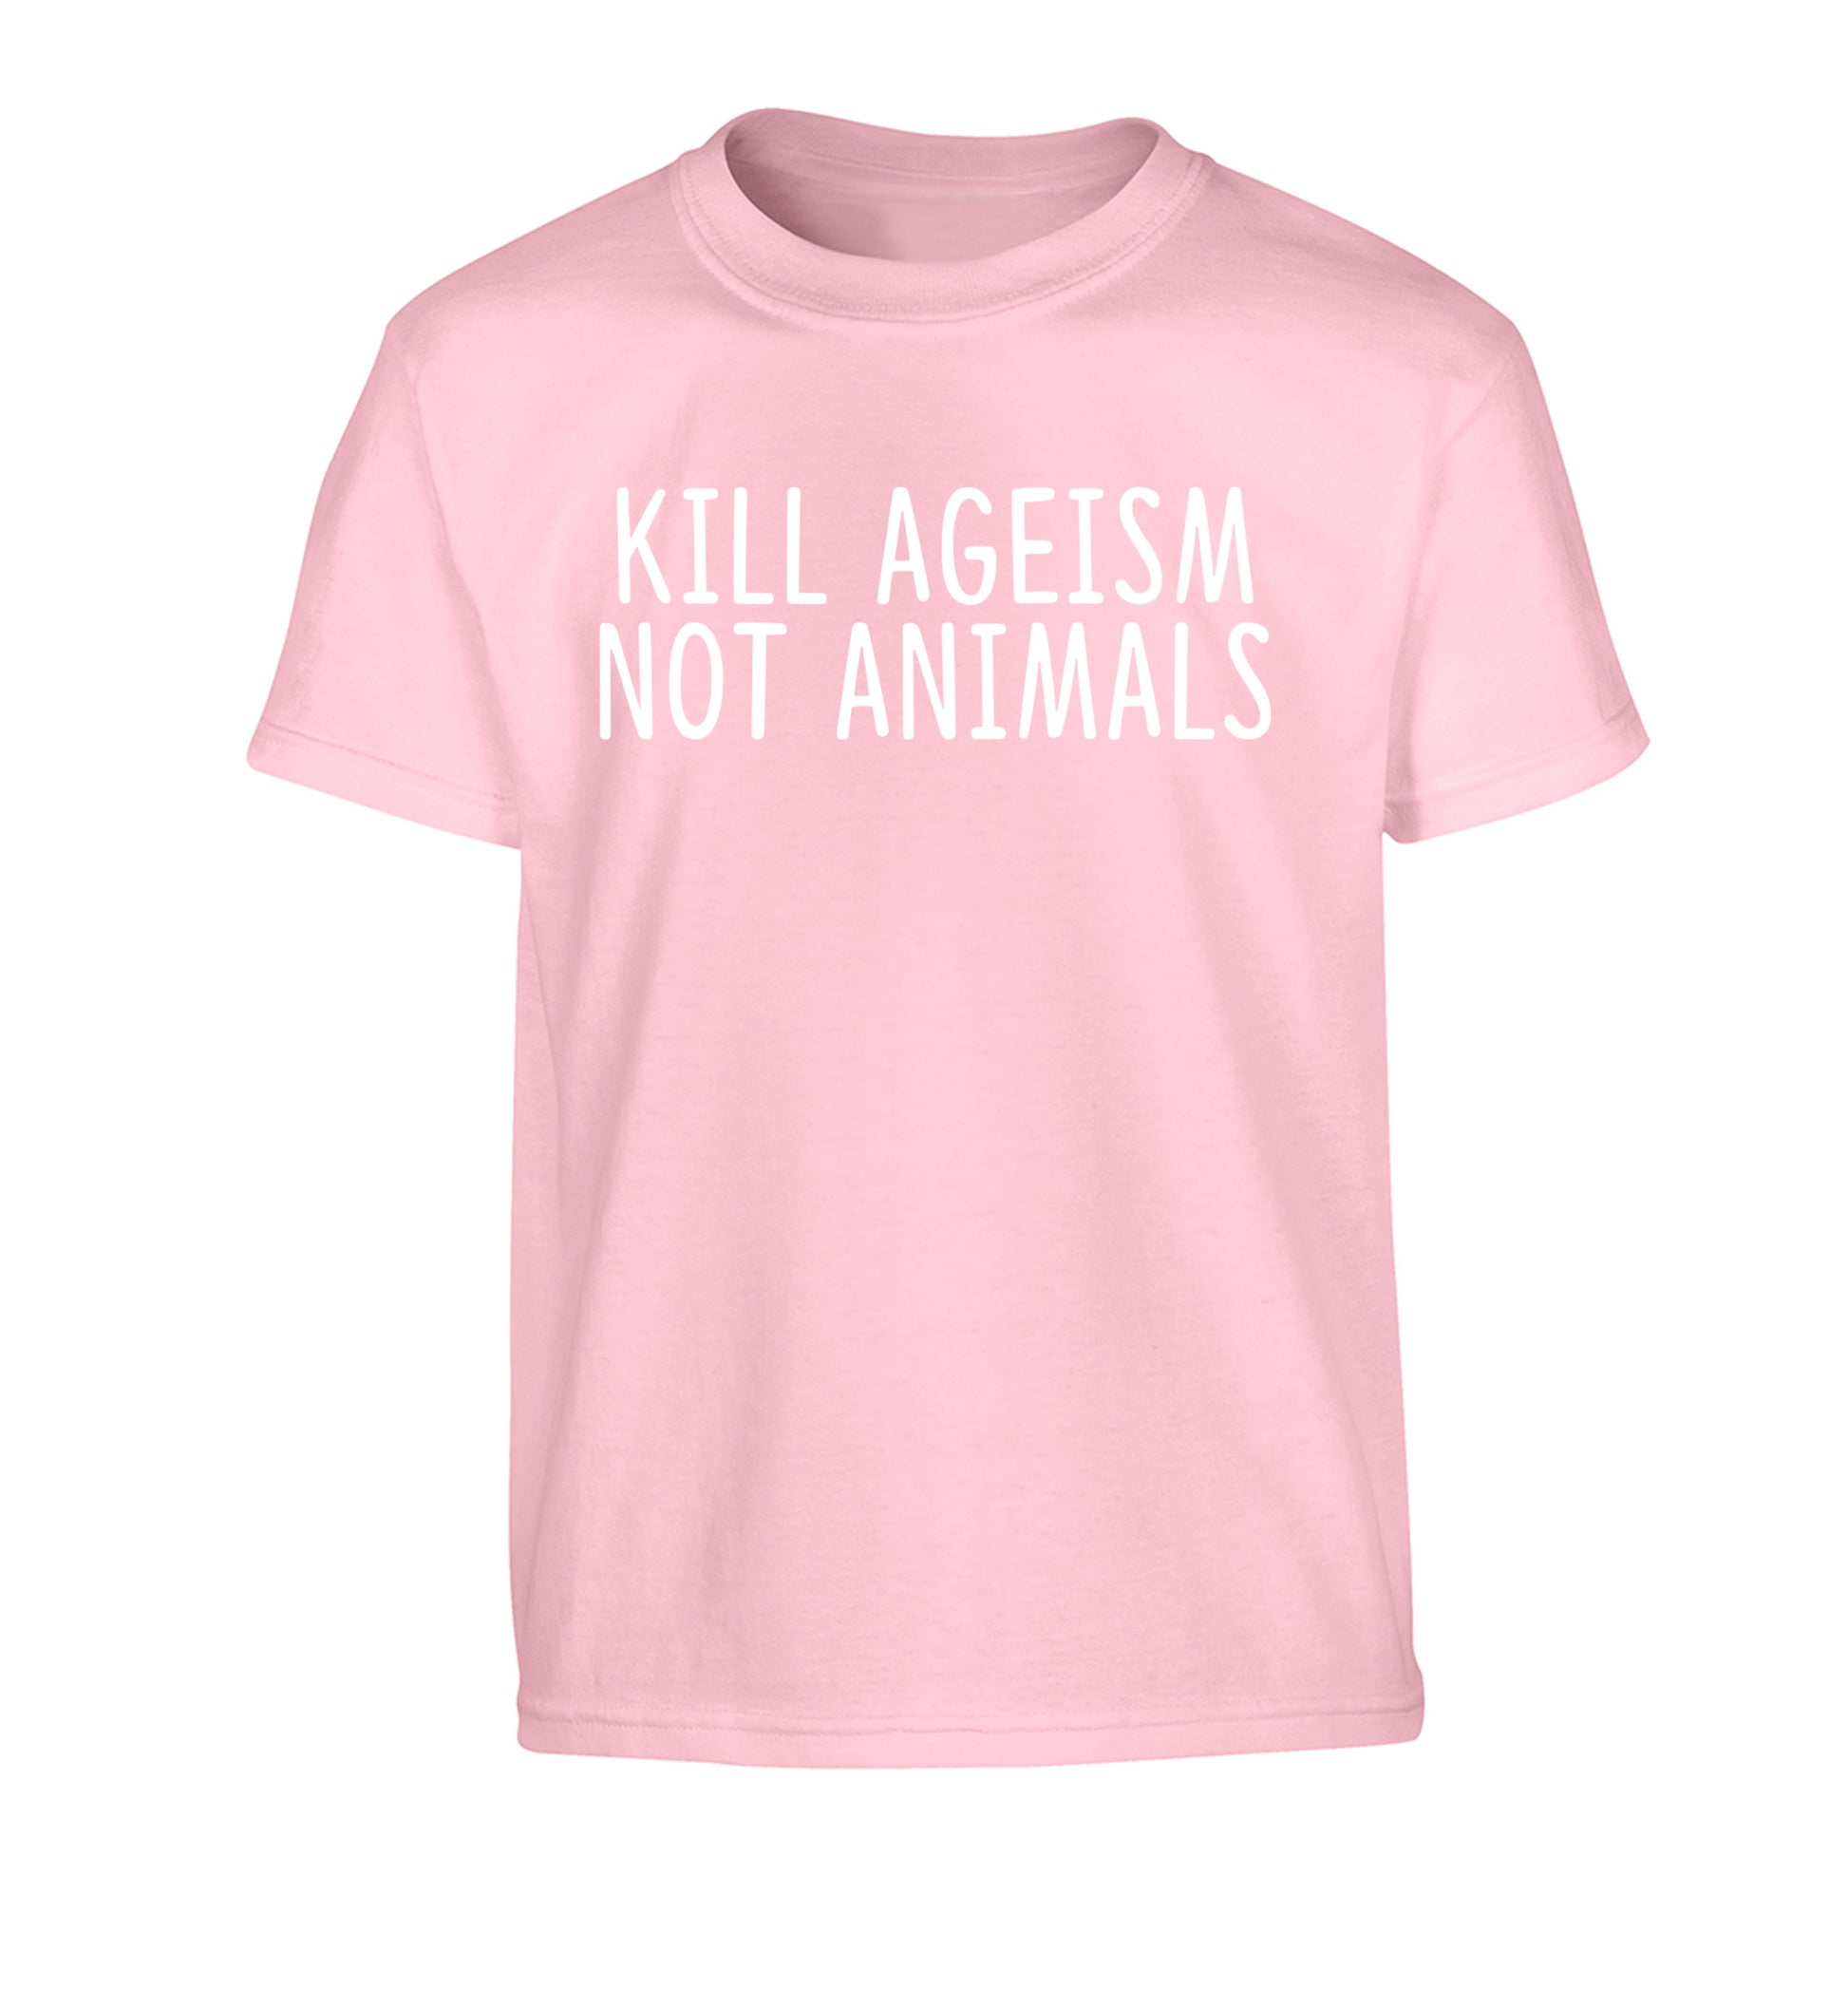 Kill Ageism Not Animals Children's light pink Tshirt 12-13 Years